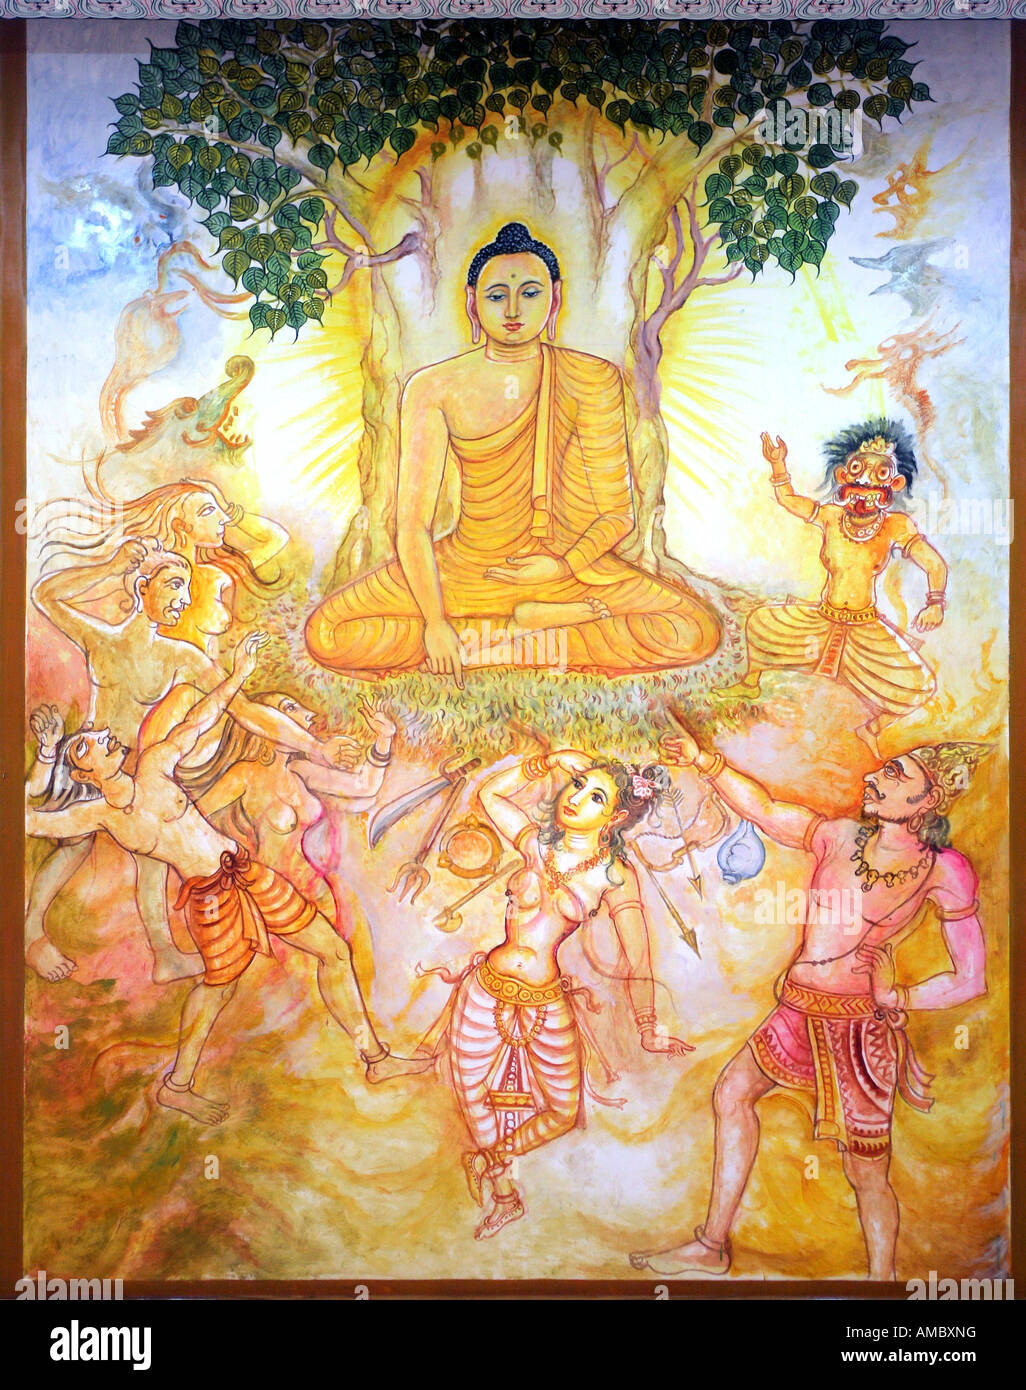 L'Inde, Bodhgaya, 23.11.2007 : Bouddha méditant sous l'arbre de la Bodhi, Temple de la Mahabodhi Banque D'Images